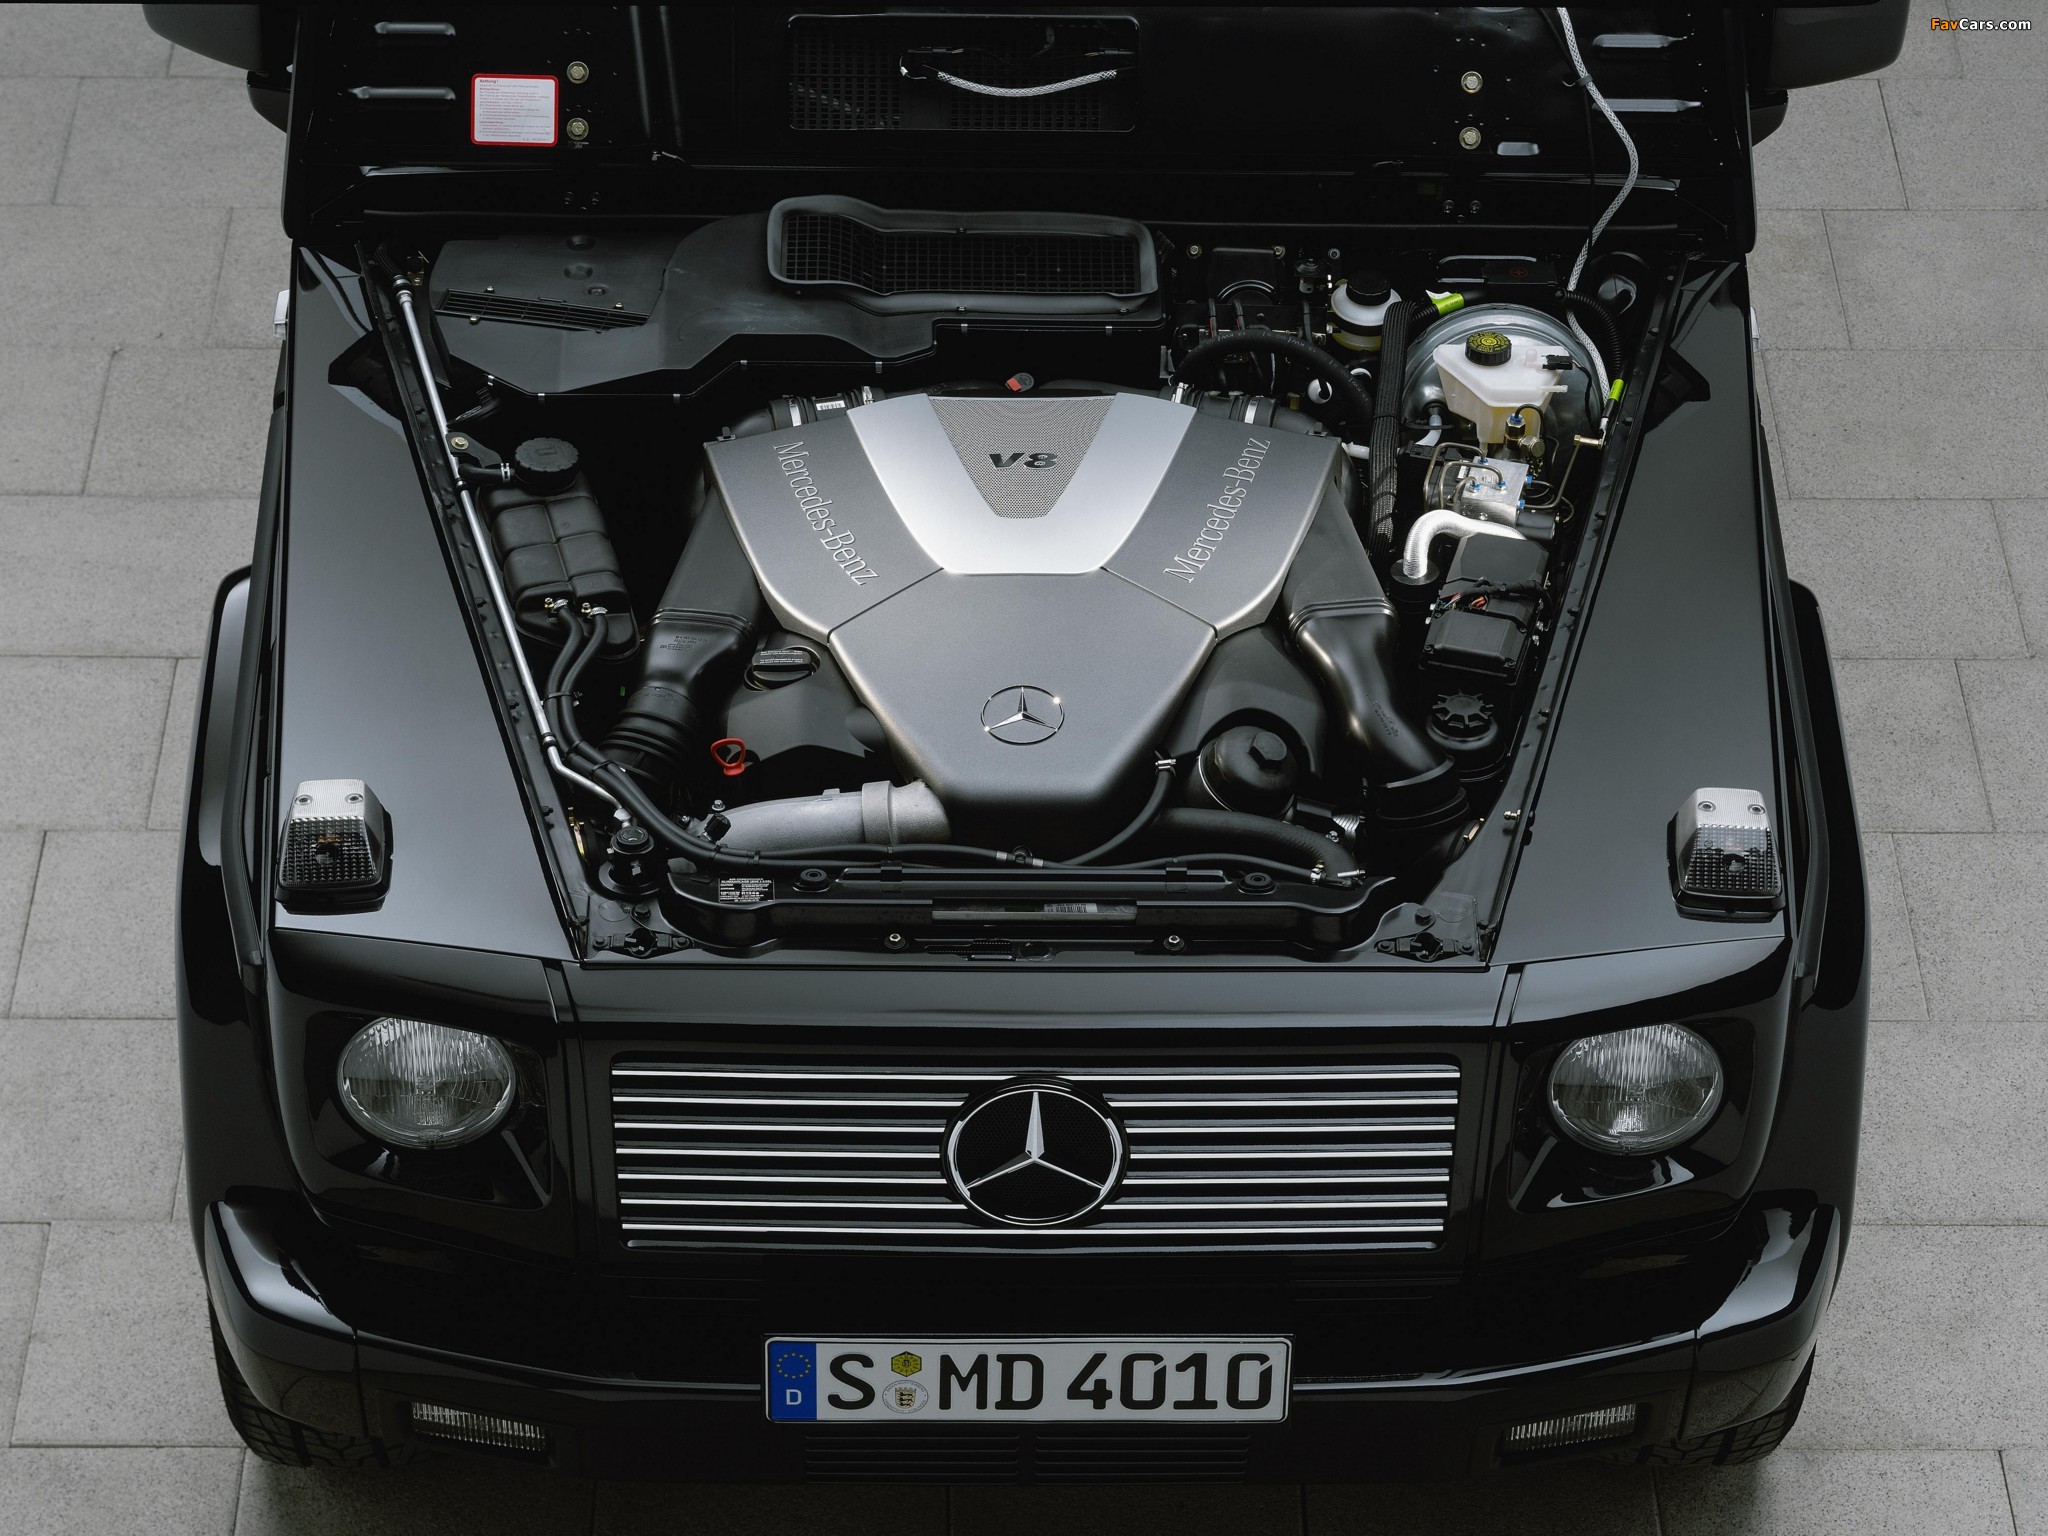 Cdi двигатели mercedes. Mercedes Benz g400 CDI. Mercedes w463 мотор. W463 дизель мотор. Mercedes Benz g class 2002 под капотом.